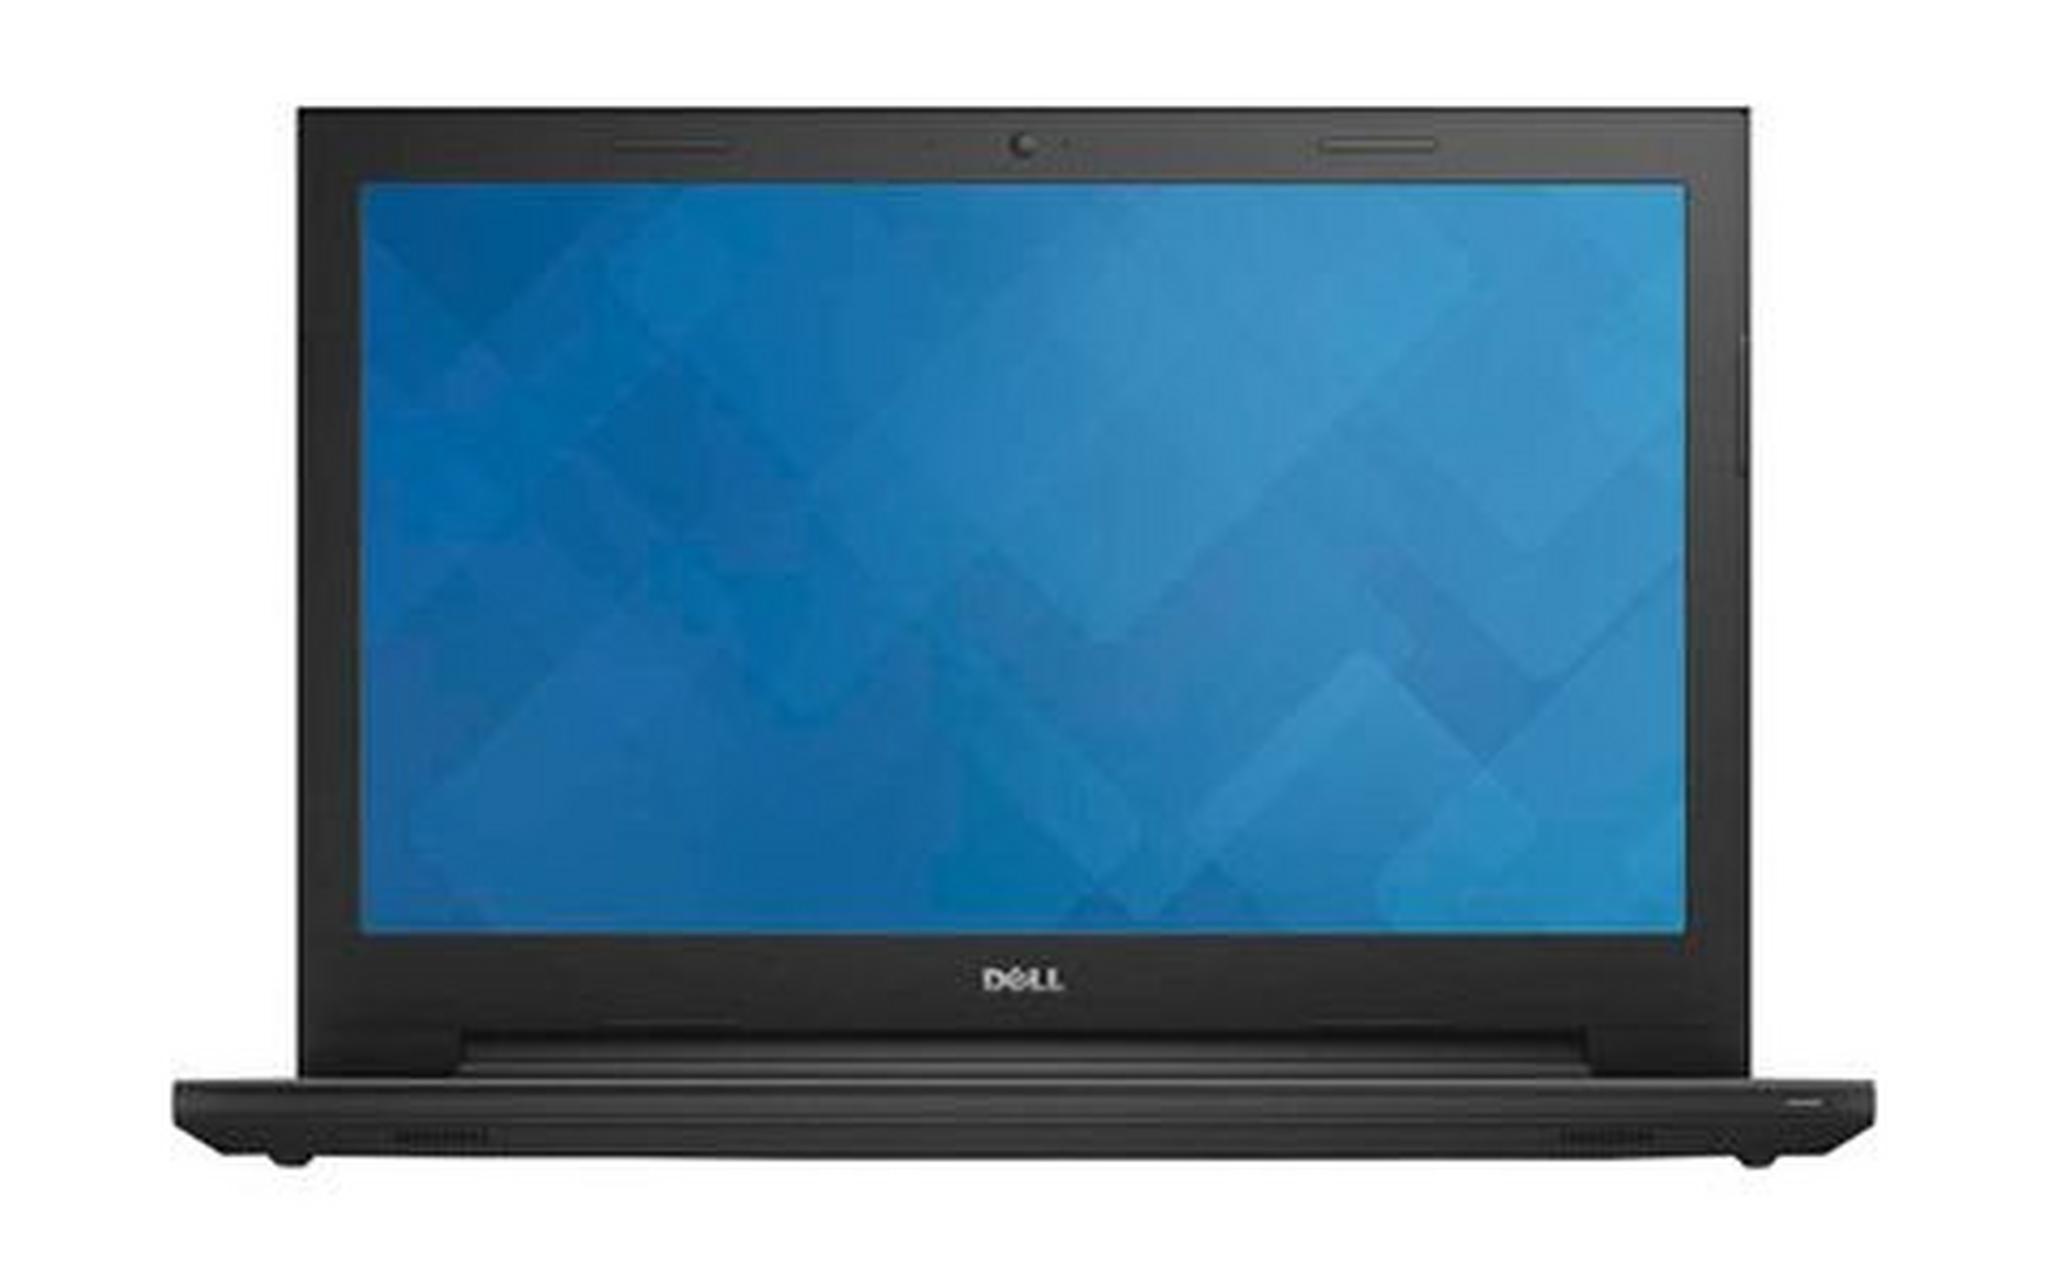 Dell Inspiron Core-i5 4GB RAM 500GB HDD 15.6-inch Laptop - Silver 3543-K0036